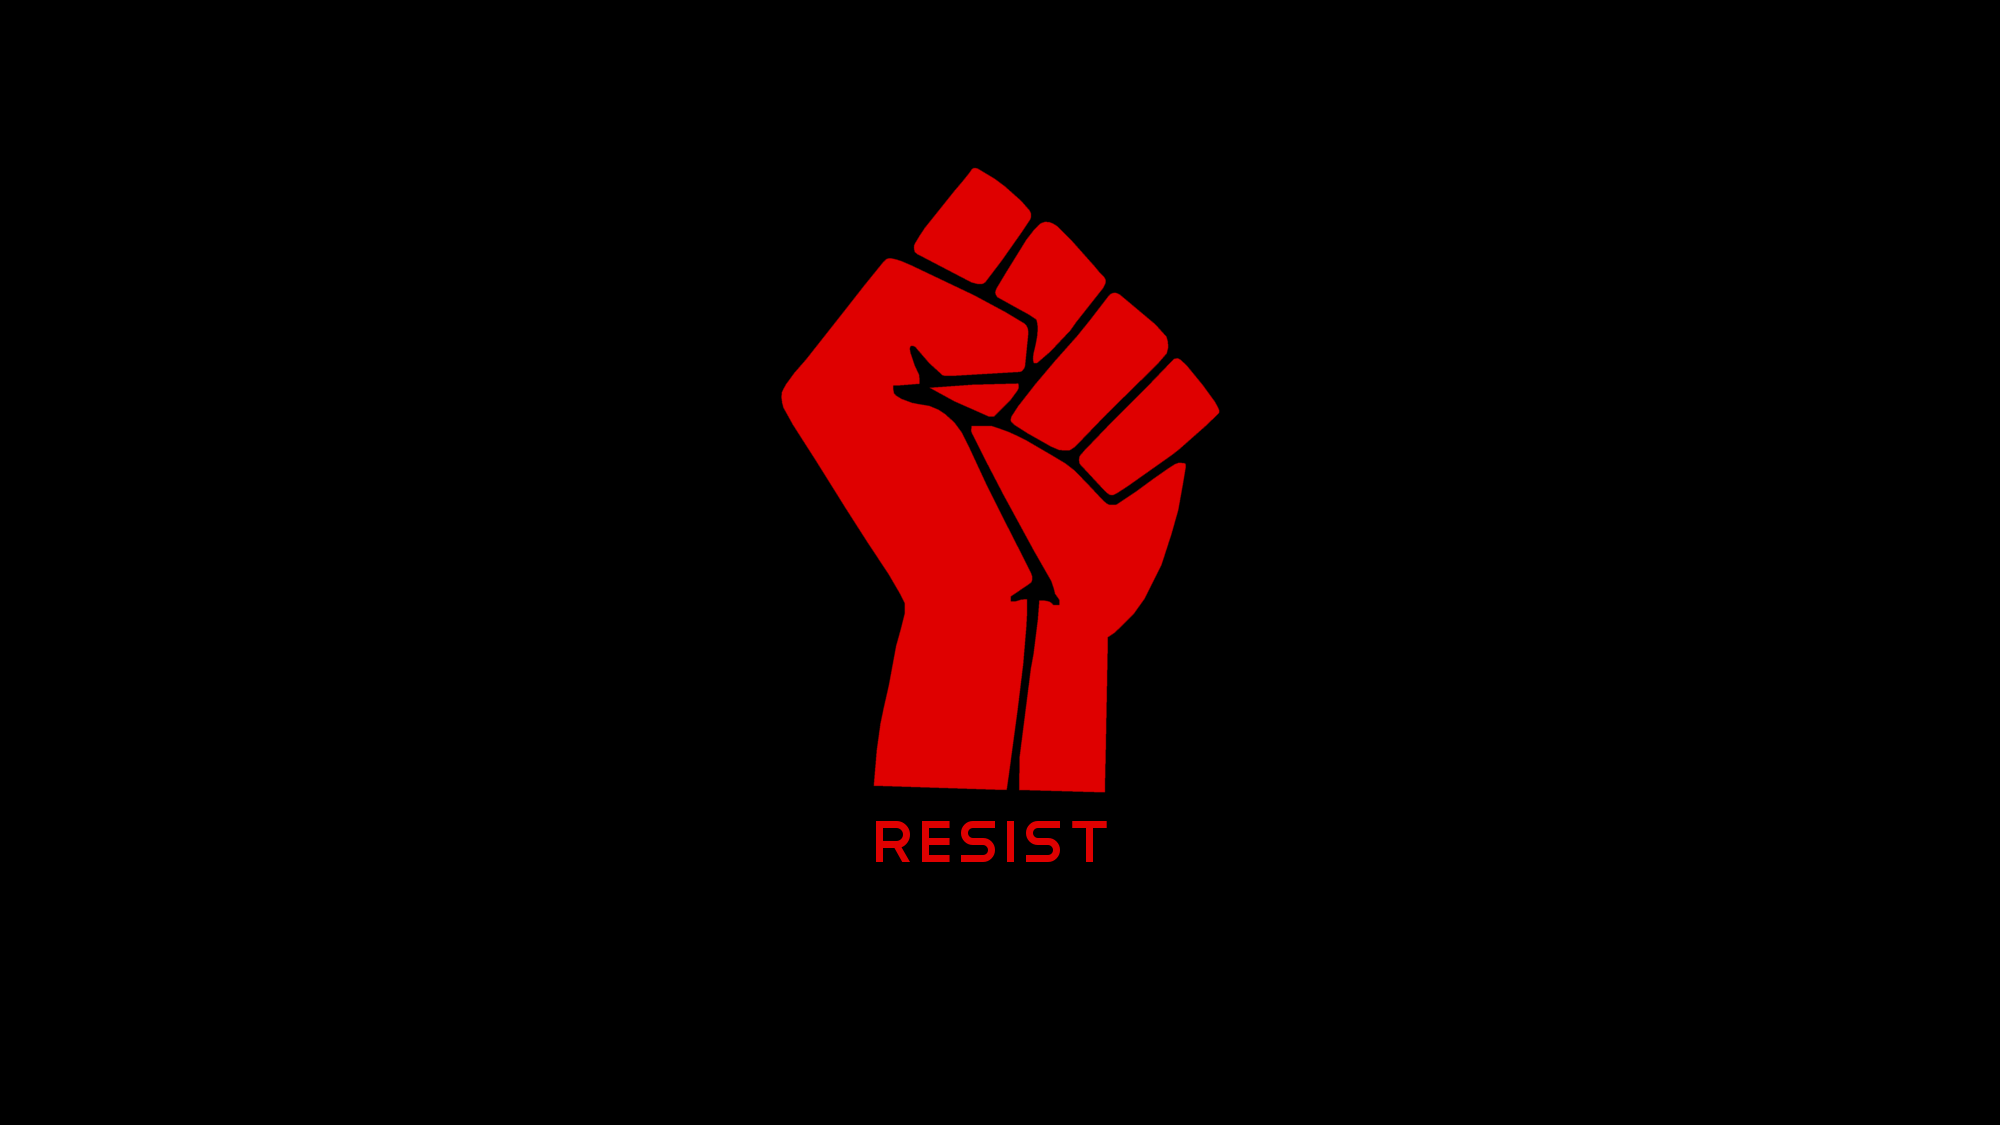 Resist Wallpaper. Resist Wallpaper Suicide, Resist Wallpaper and Resist the Devil Wallpaper